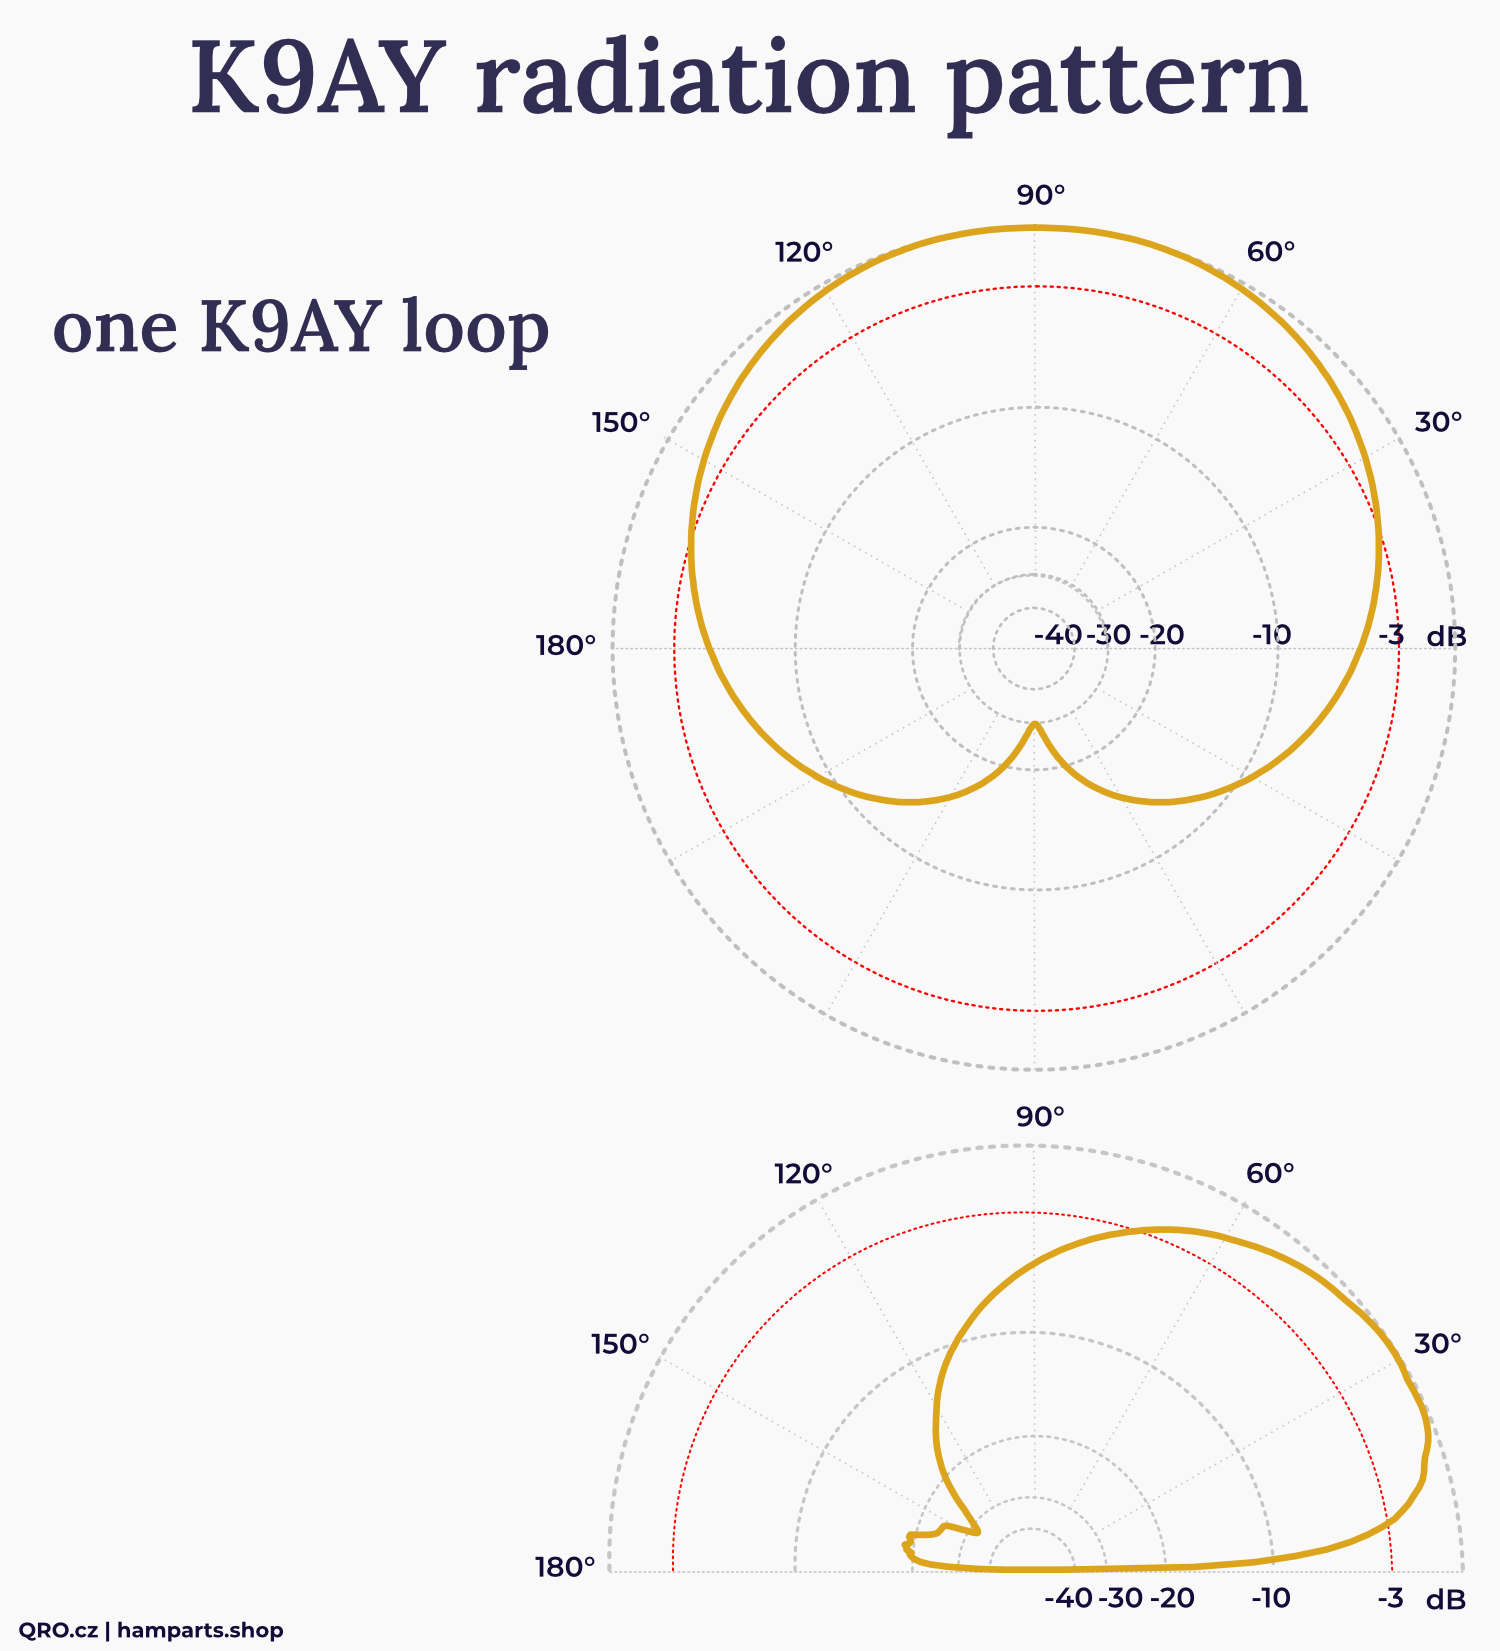 k9ay antenna pattern broadside array by qro.cz hamparts.shop